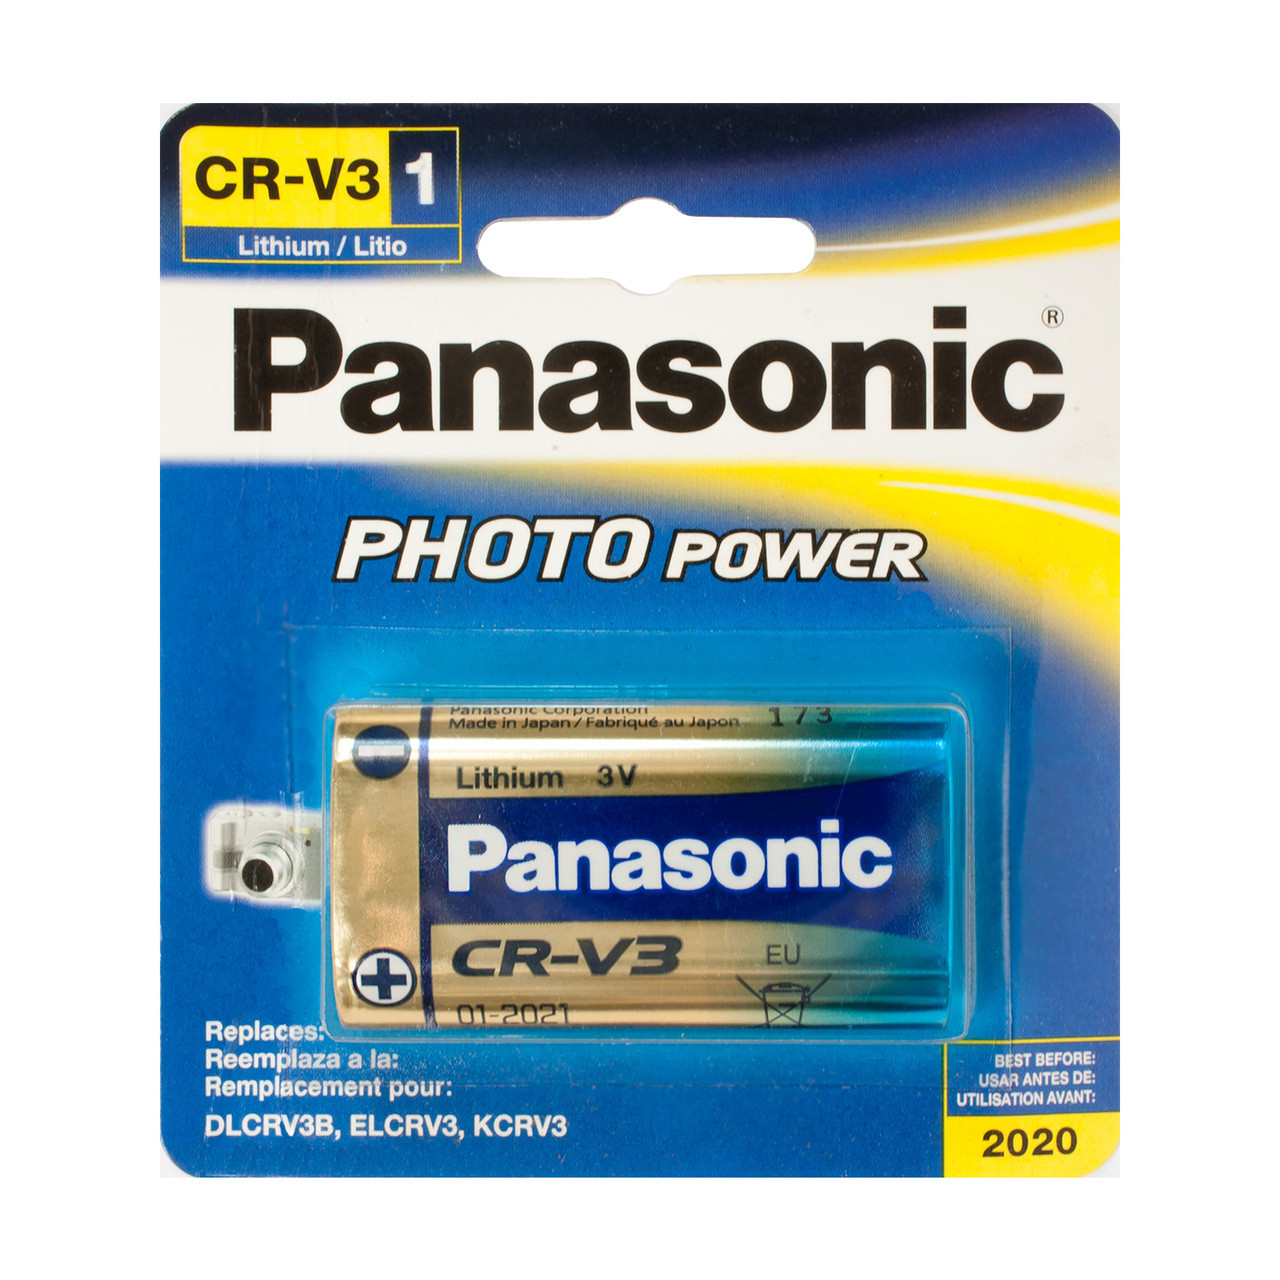 Panasonic CR-V3 Lithium 3V Battery -3 Volt Replaces DLCRV3B, ELCRV3, KCRV3